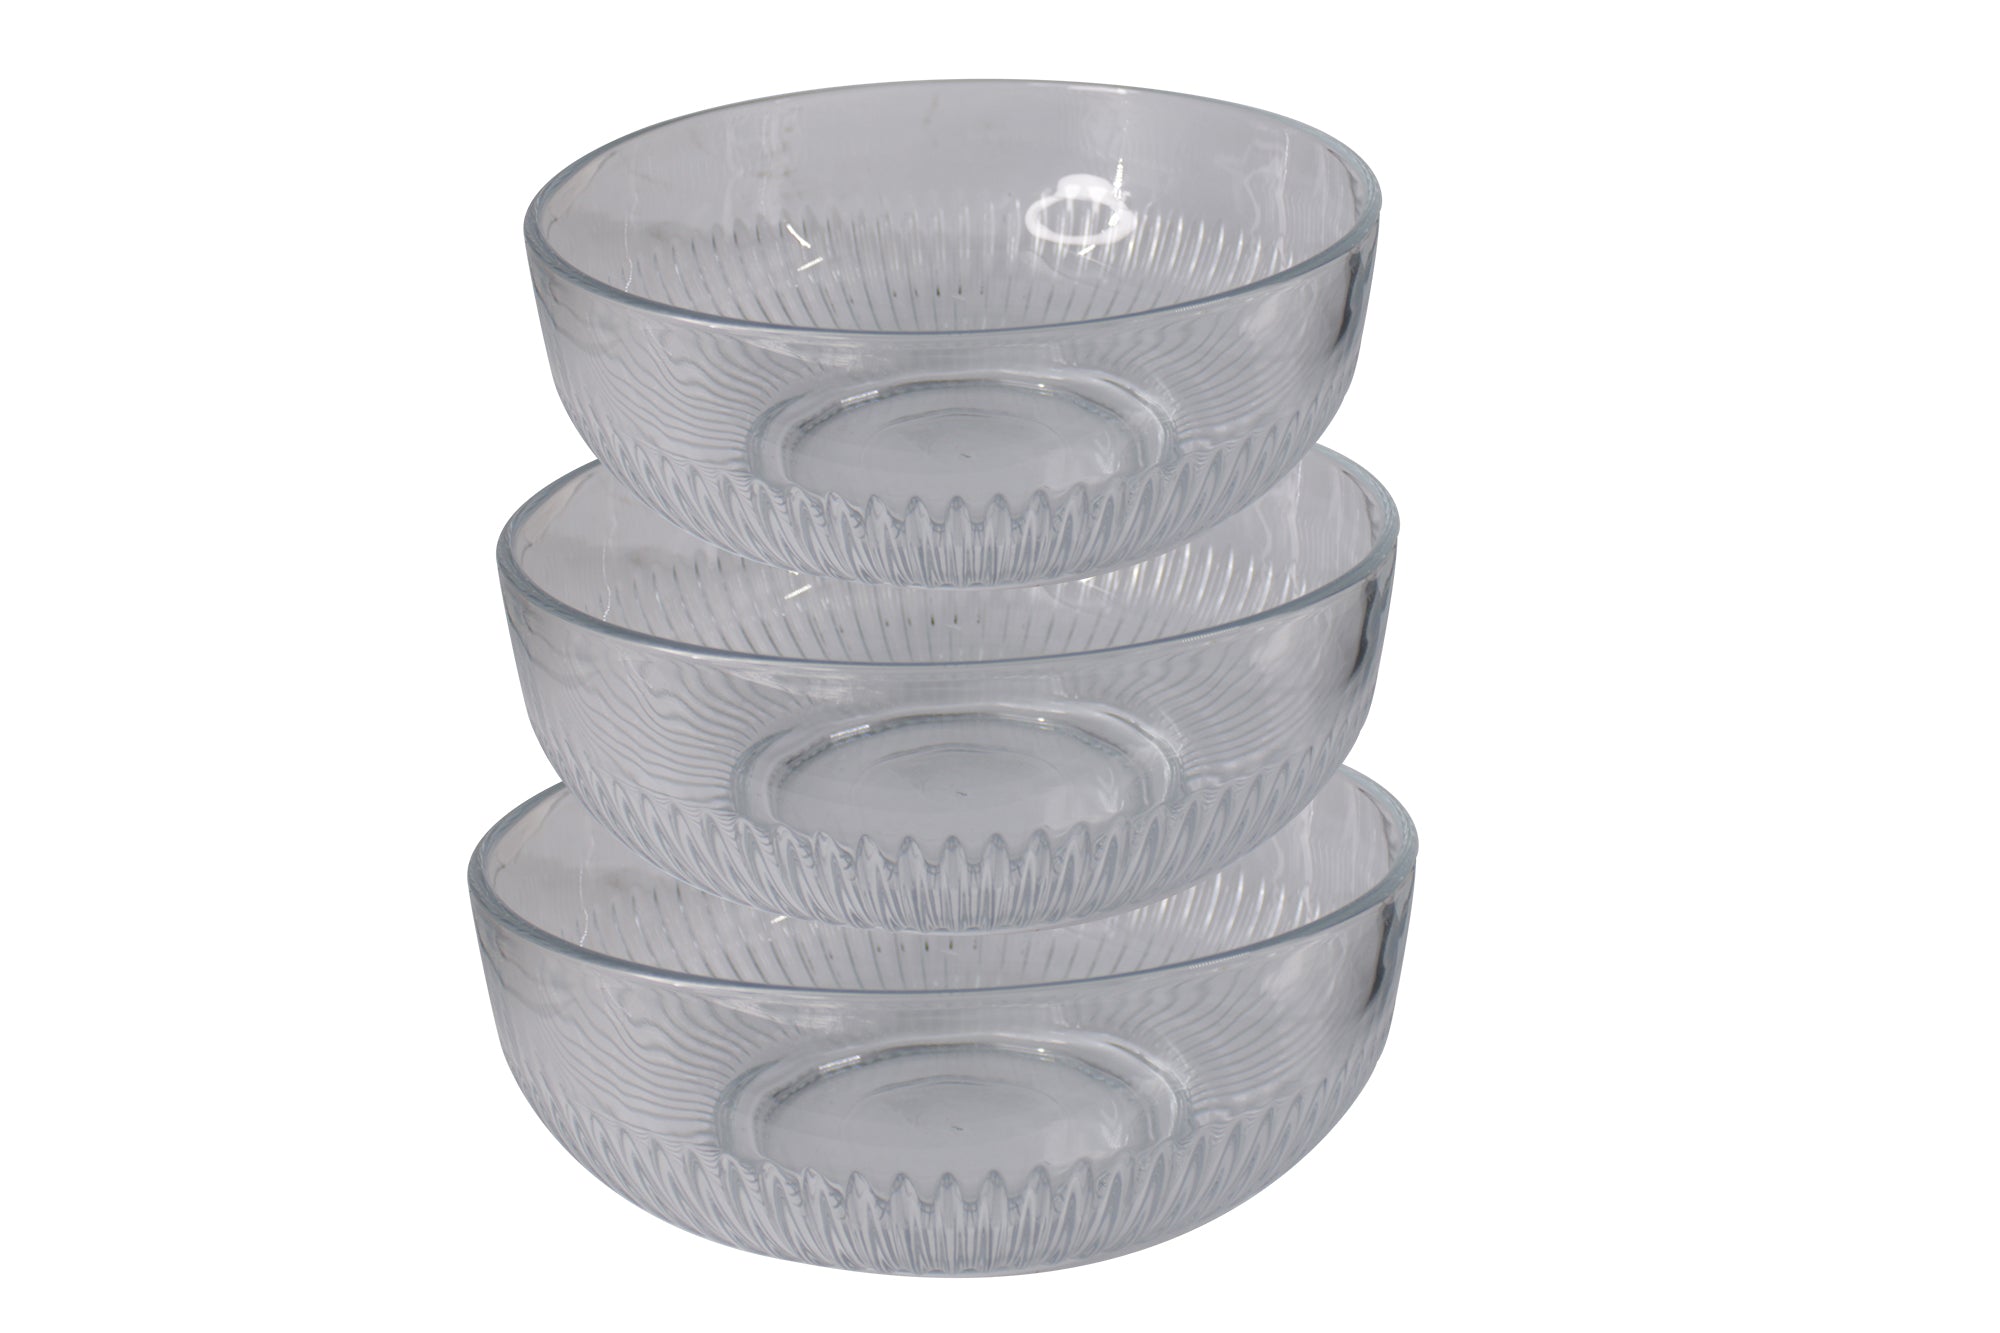 3 Piece Nesting Cut Glass Bowl Set with Silicon Lids - 8, 1.2, & 2.2L